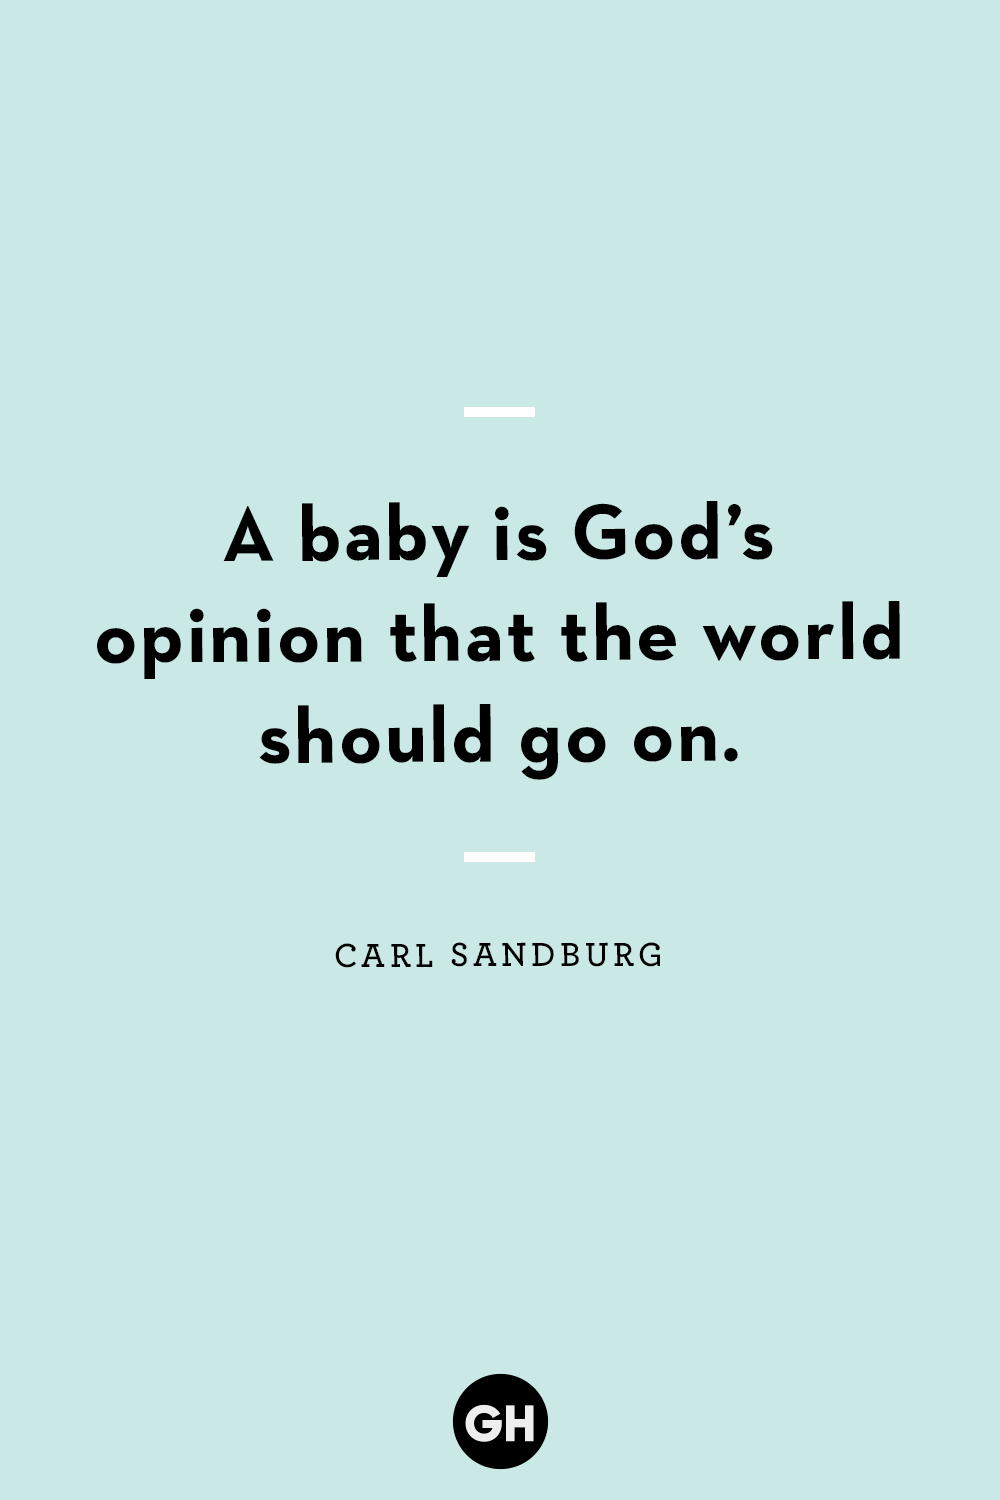 Newborn Baby Quotes